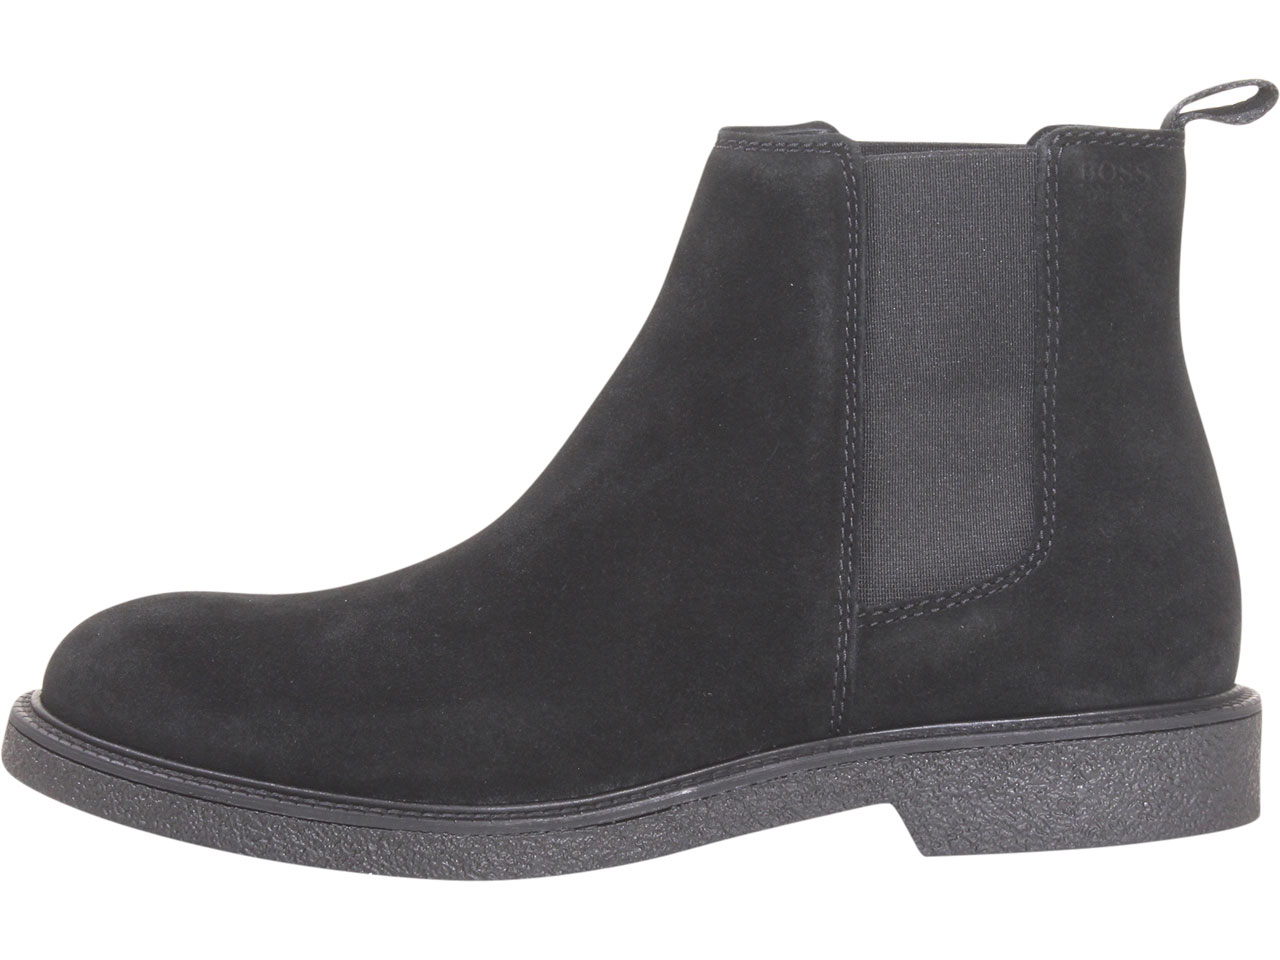 Hugo Boss Men's Tunley Chelsea Boots Suede Leather Shoes Black Sz. 13 50460014 |